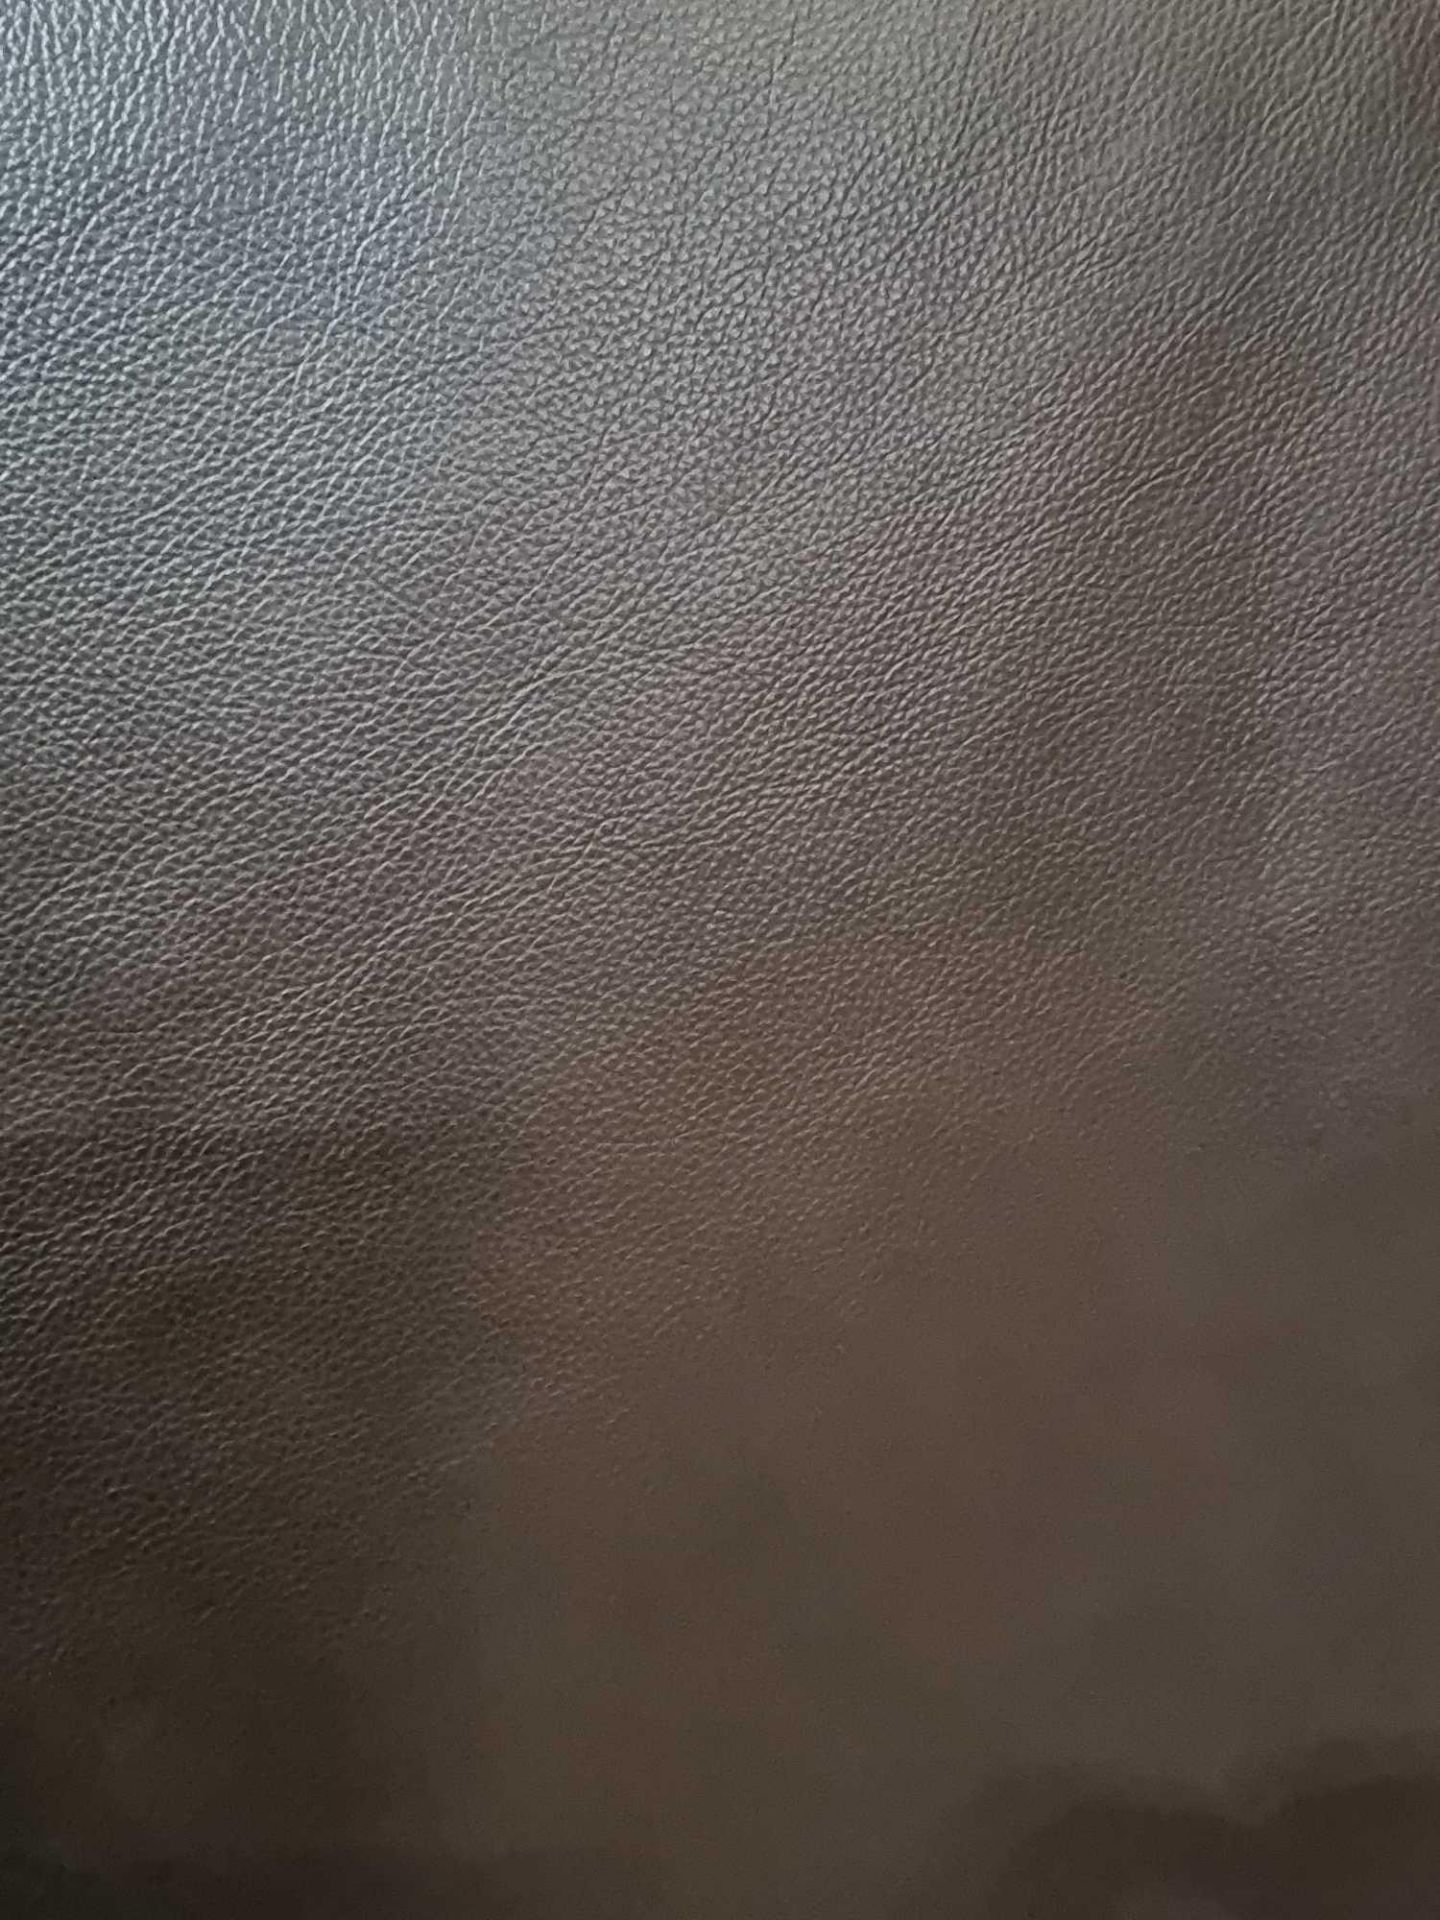 Chocolate Brown Leather Hide approximately 3.57mÂ² 2.1 x 1.7cm - Bild 2 aus 2